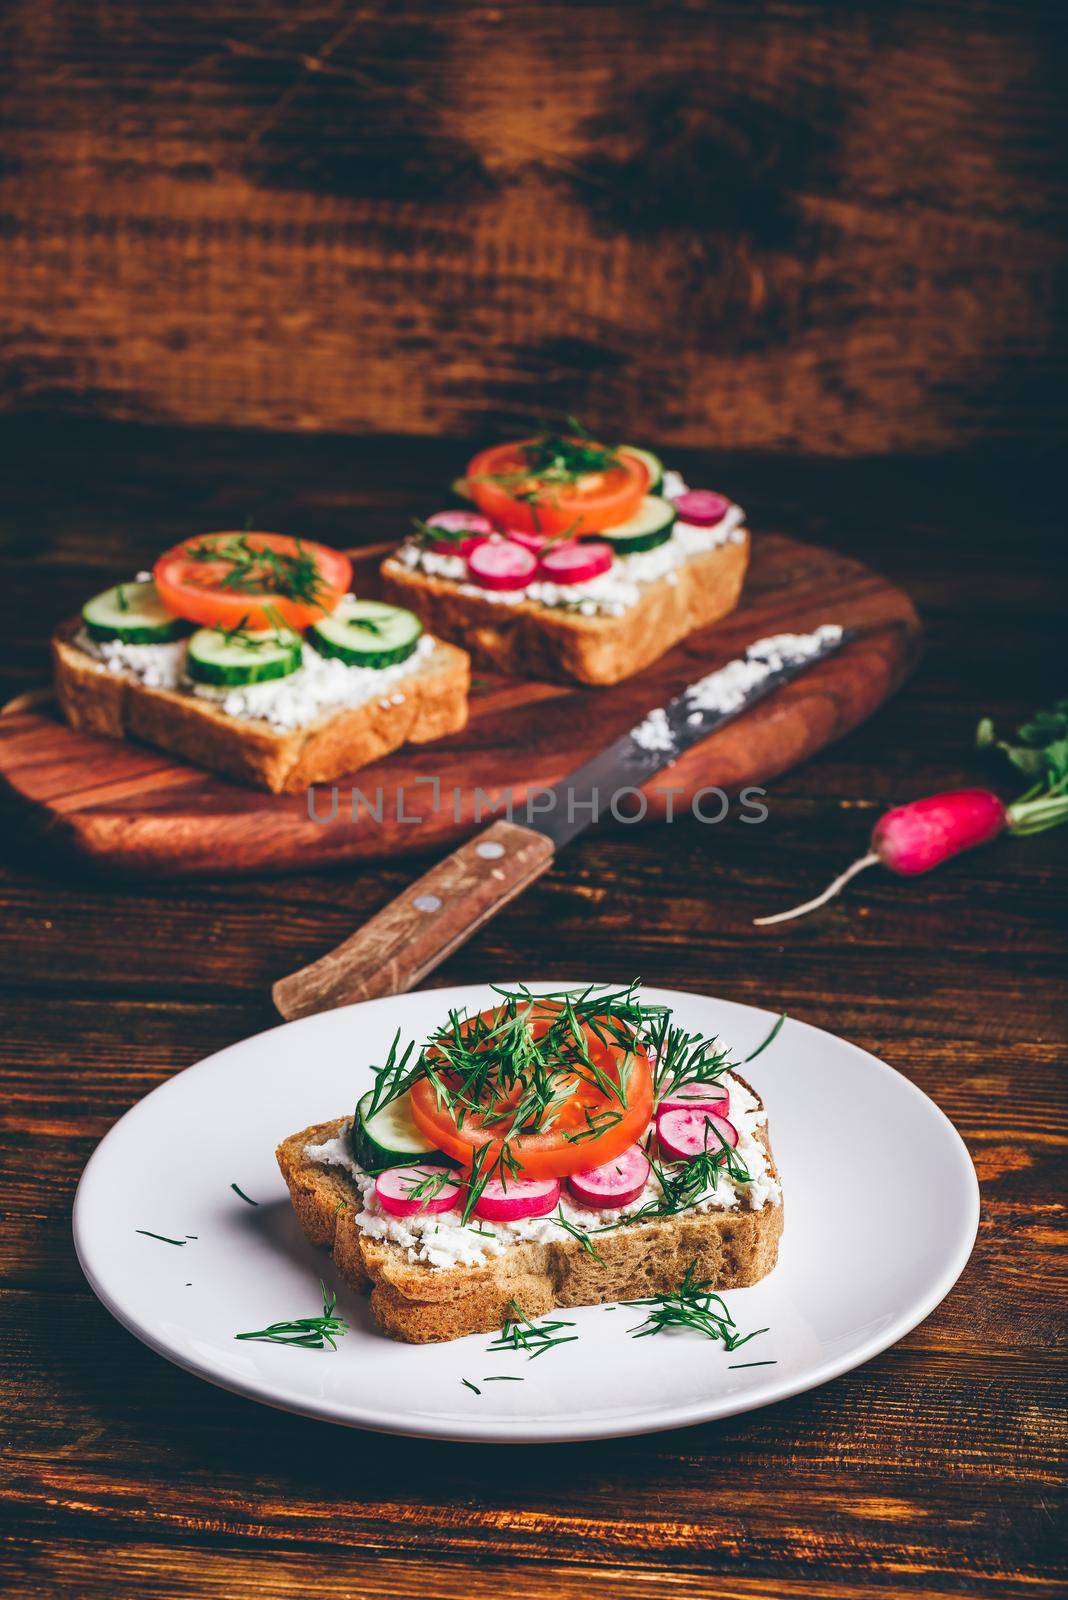 Vegetarian sandwich with fresh vegetables by Seva_blsv